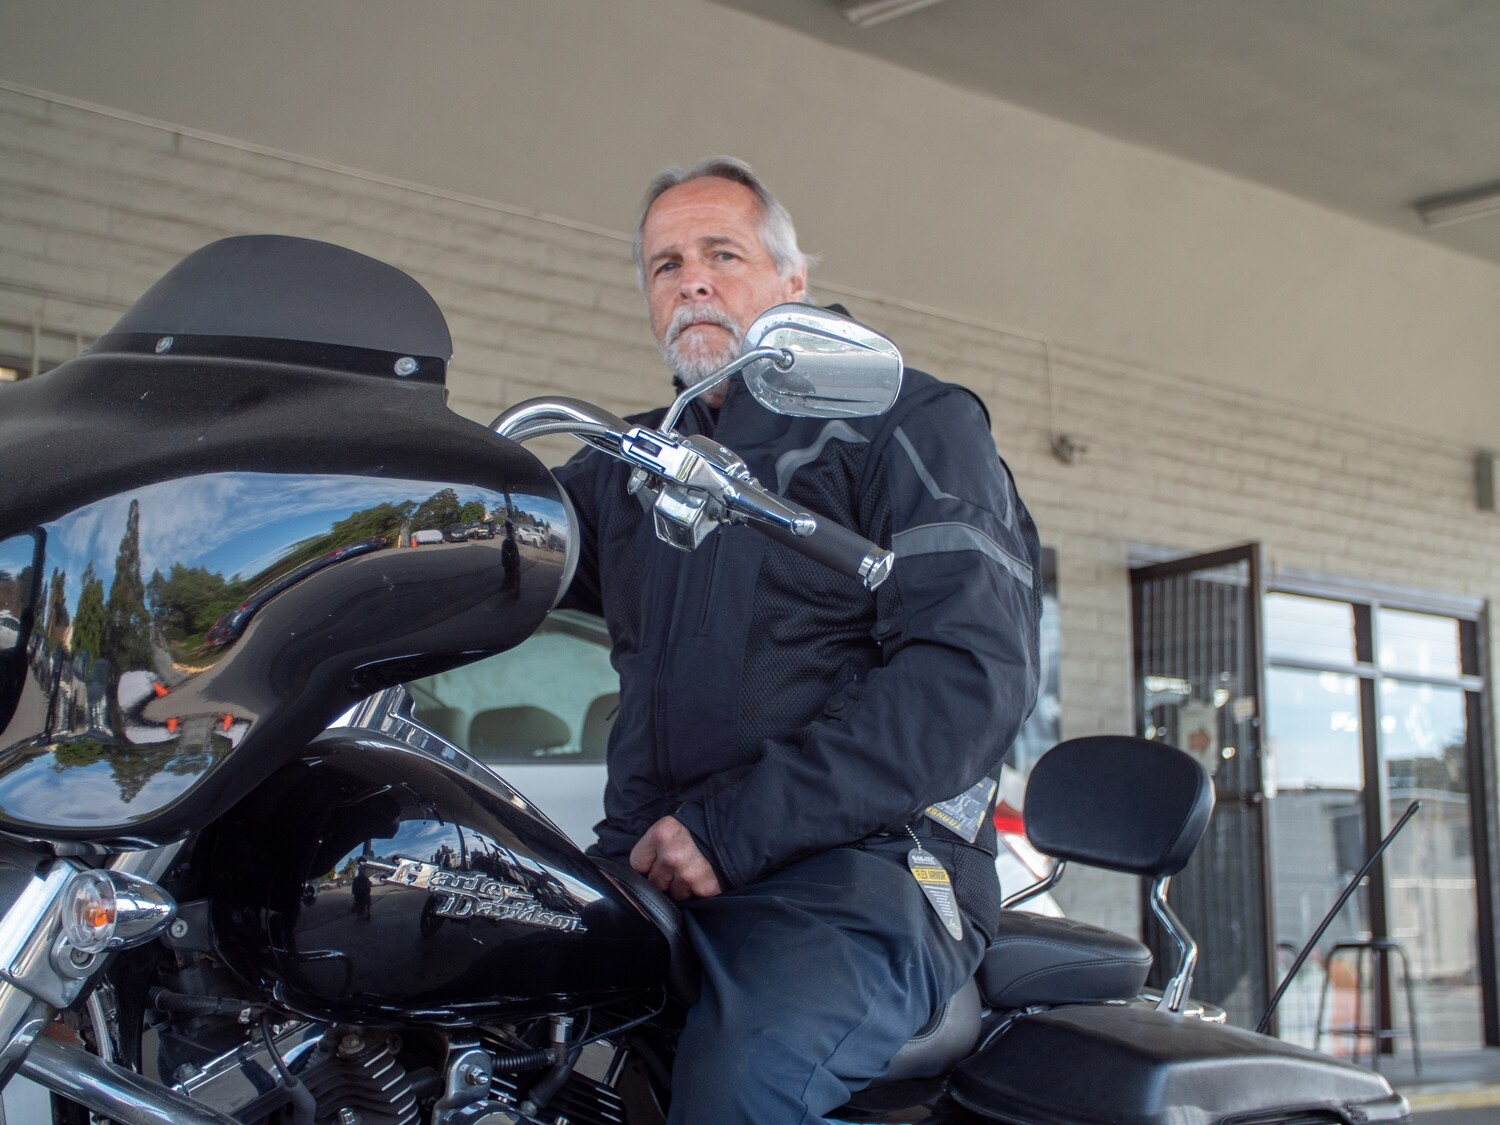 Joe Rocket Dakota Motorcycle Jacket Gear Review Rider, 44% OFF